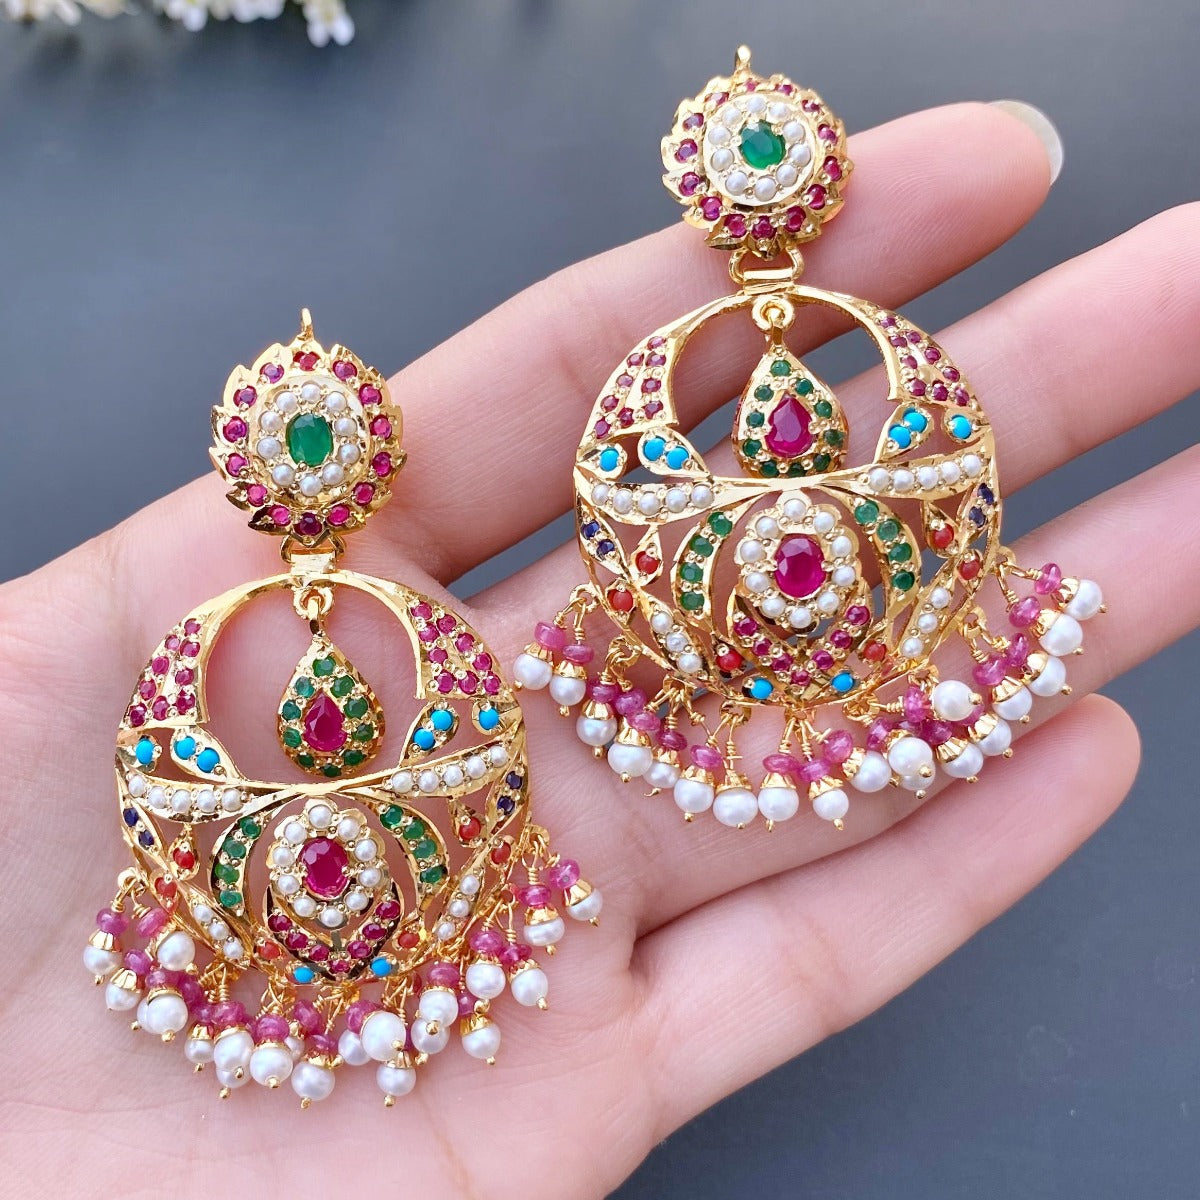 sadikari earrings